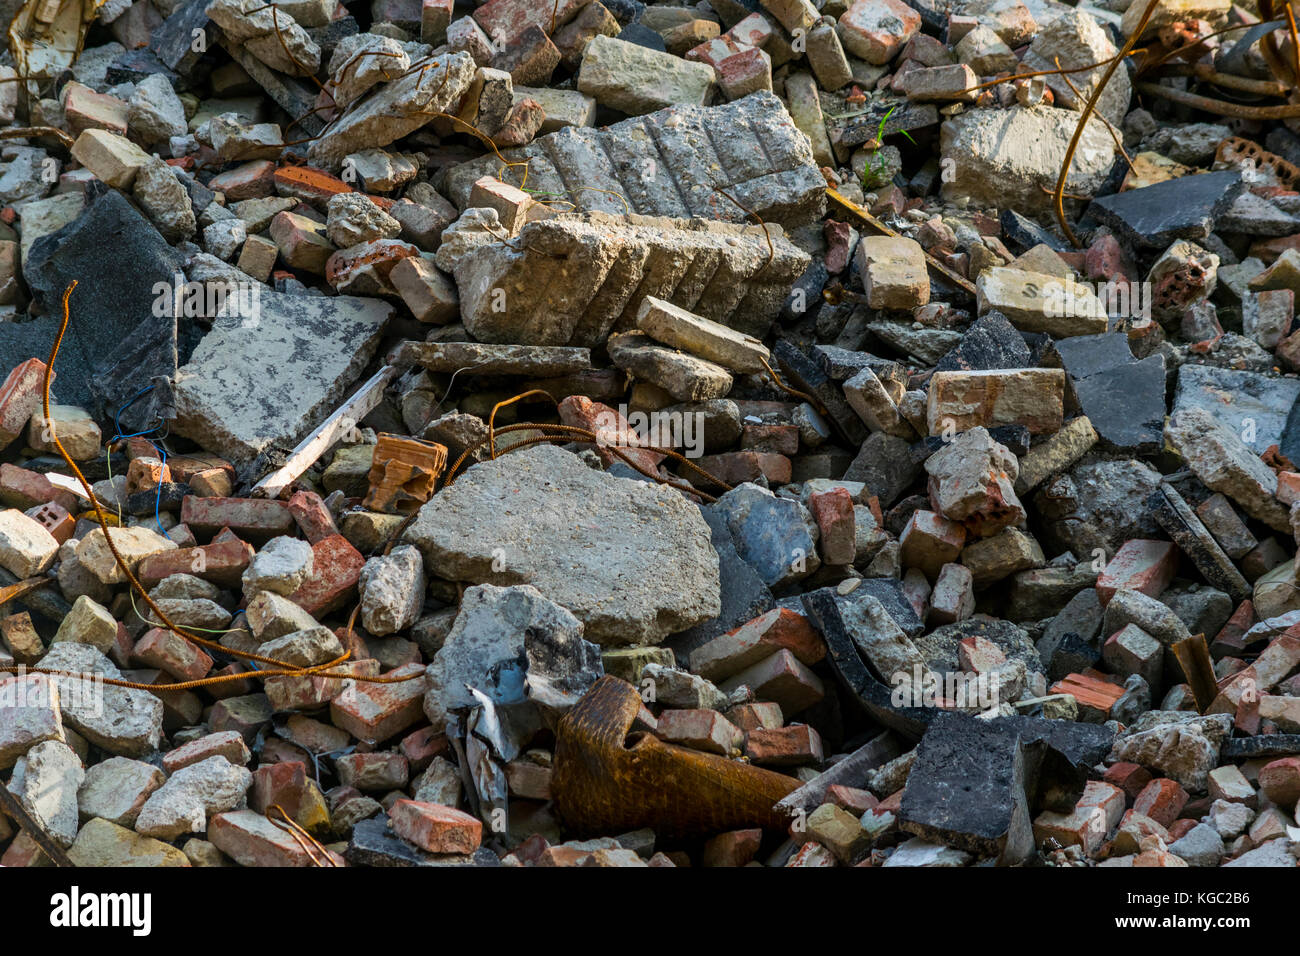 Pile of rubbish, demolished house, background. Stone, brick and metal debris waste, closeup. Stock Photo